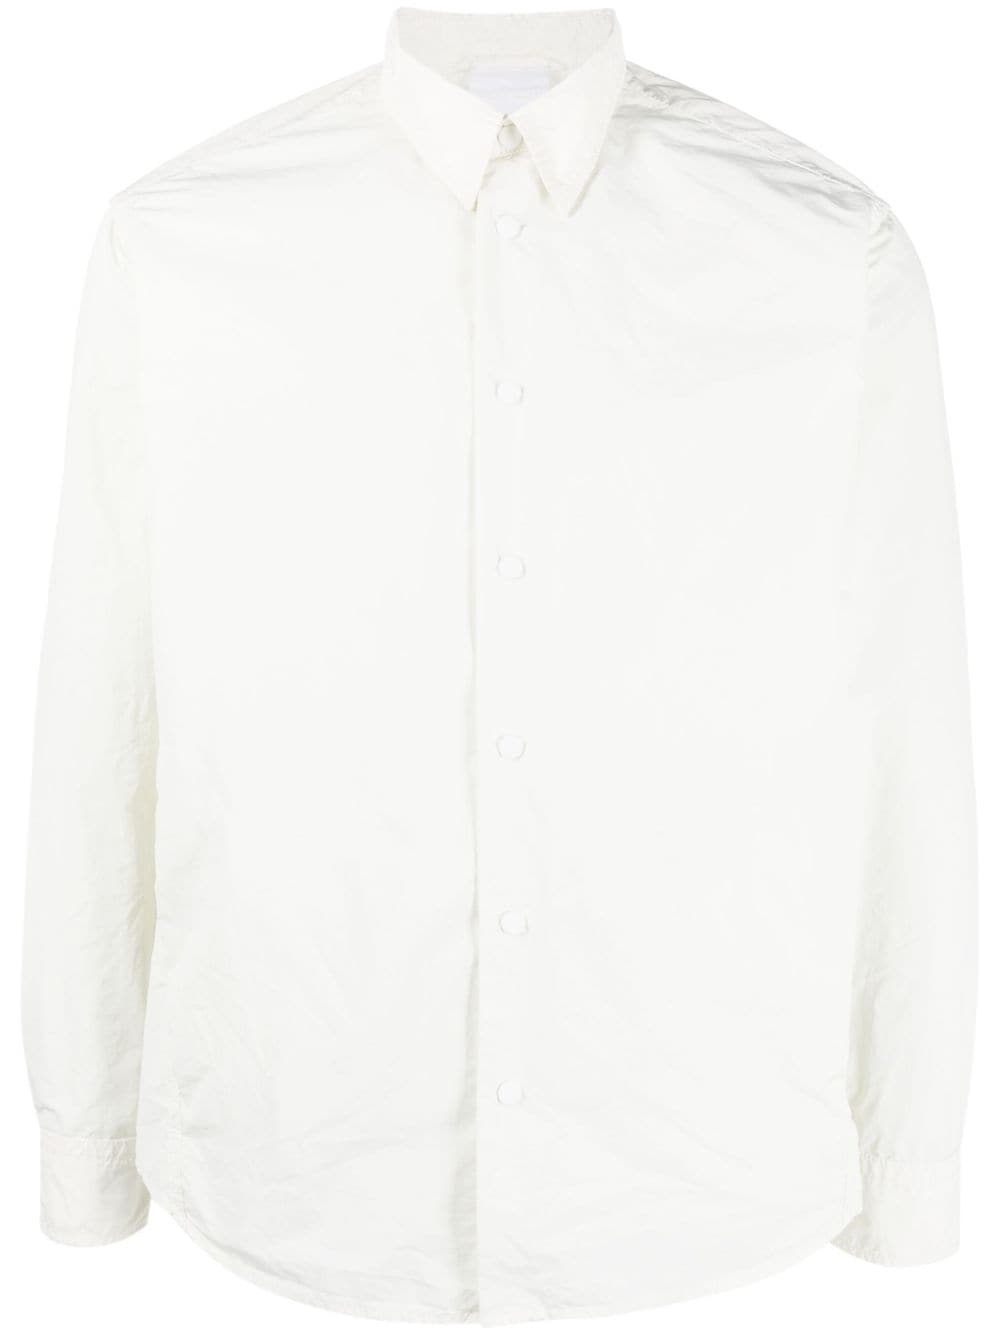 long-sleeved buttoned shirt - 1